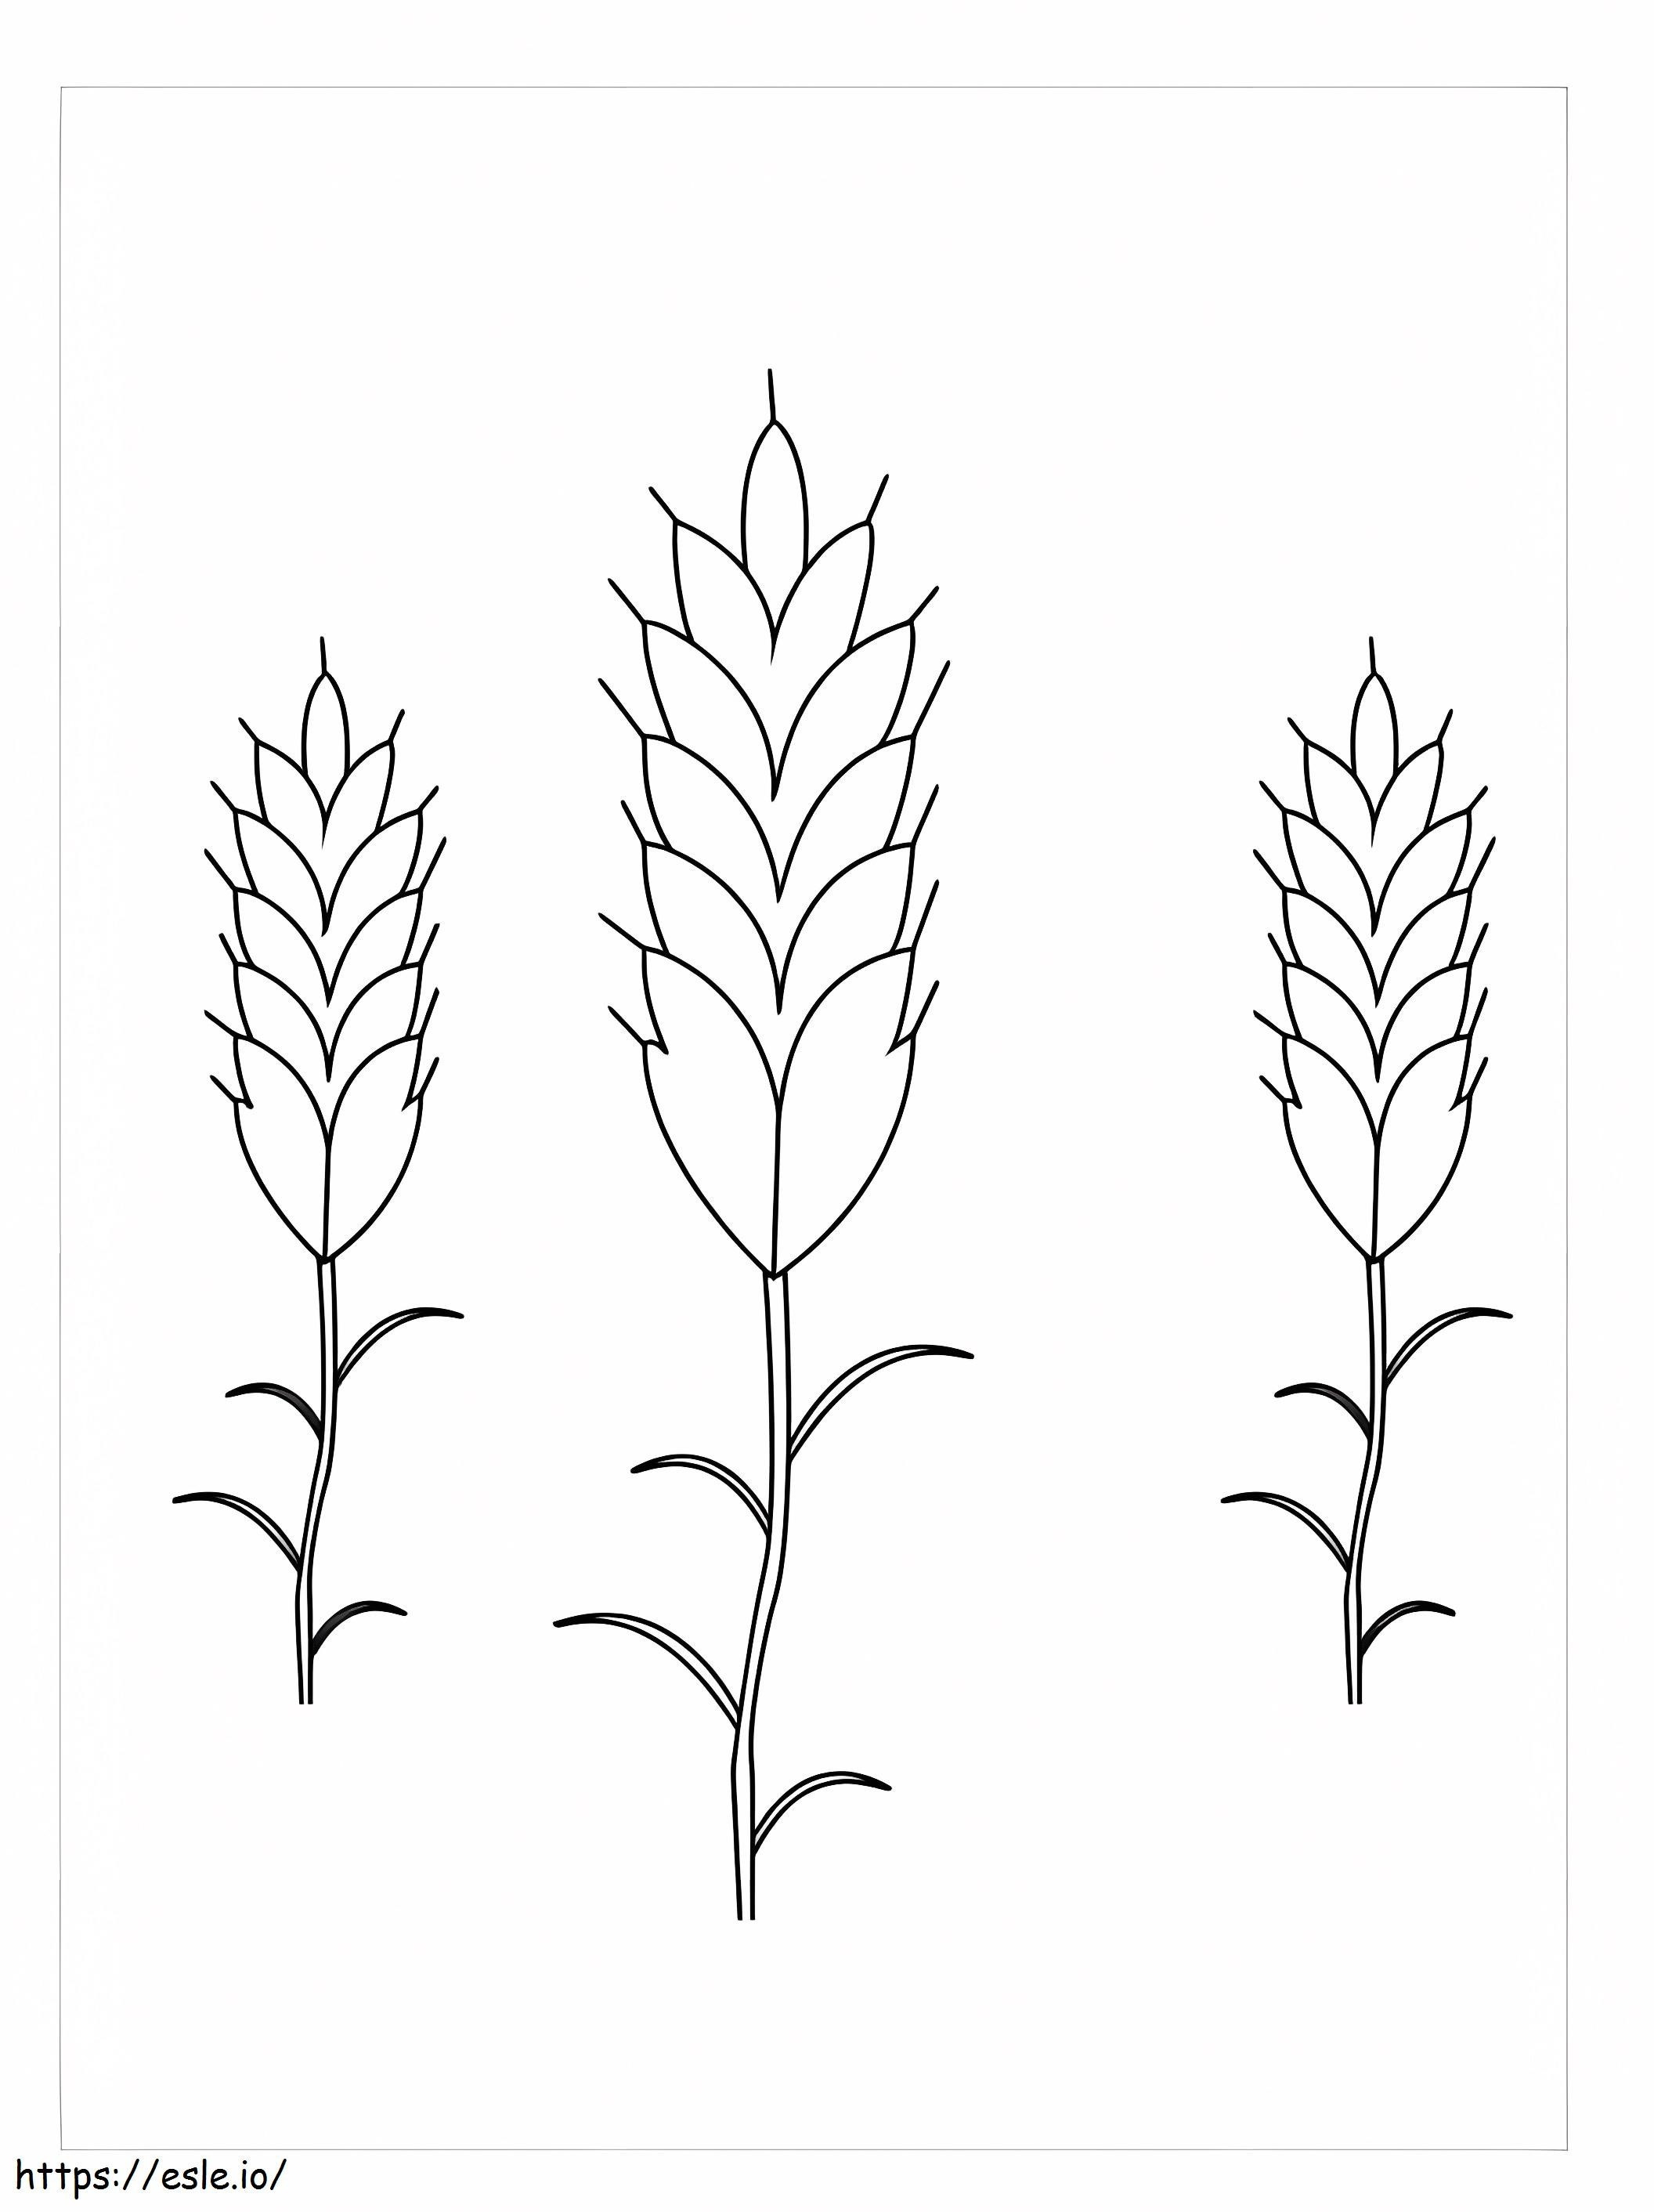 Tres plantas de trigo para colorear